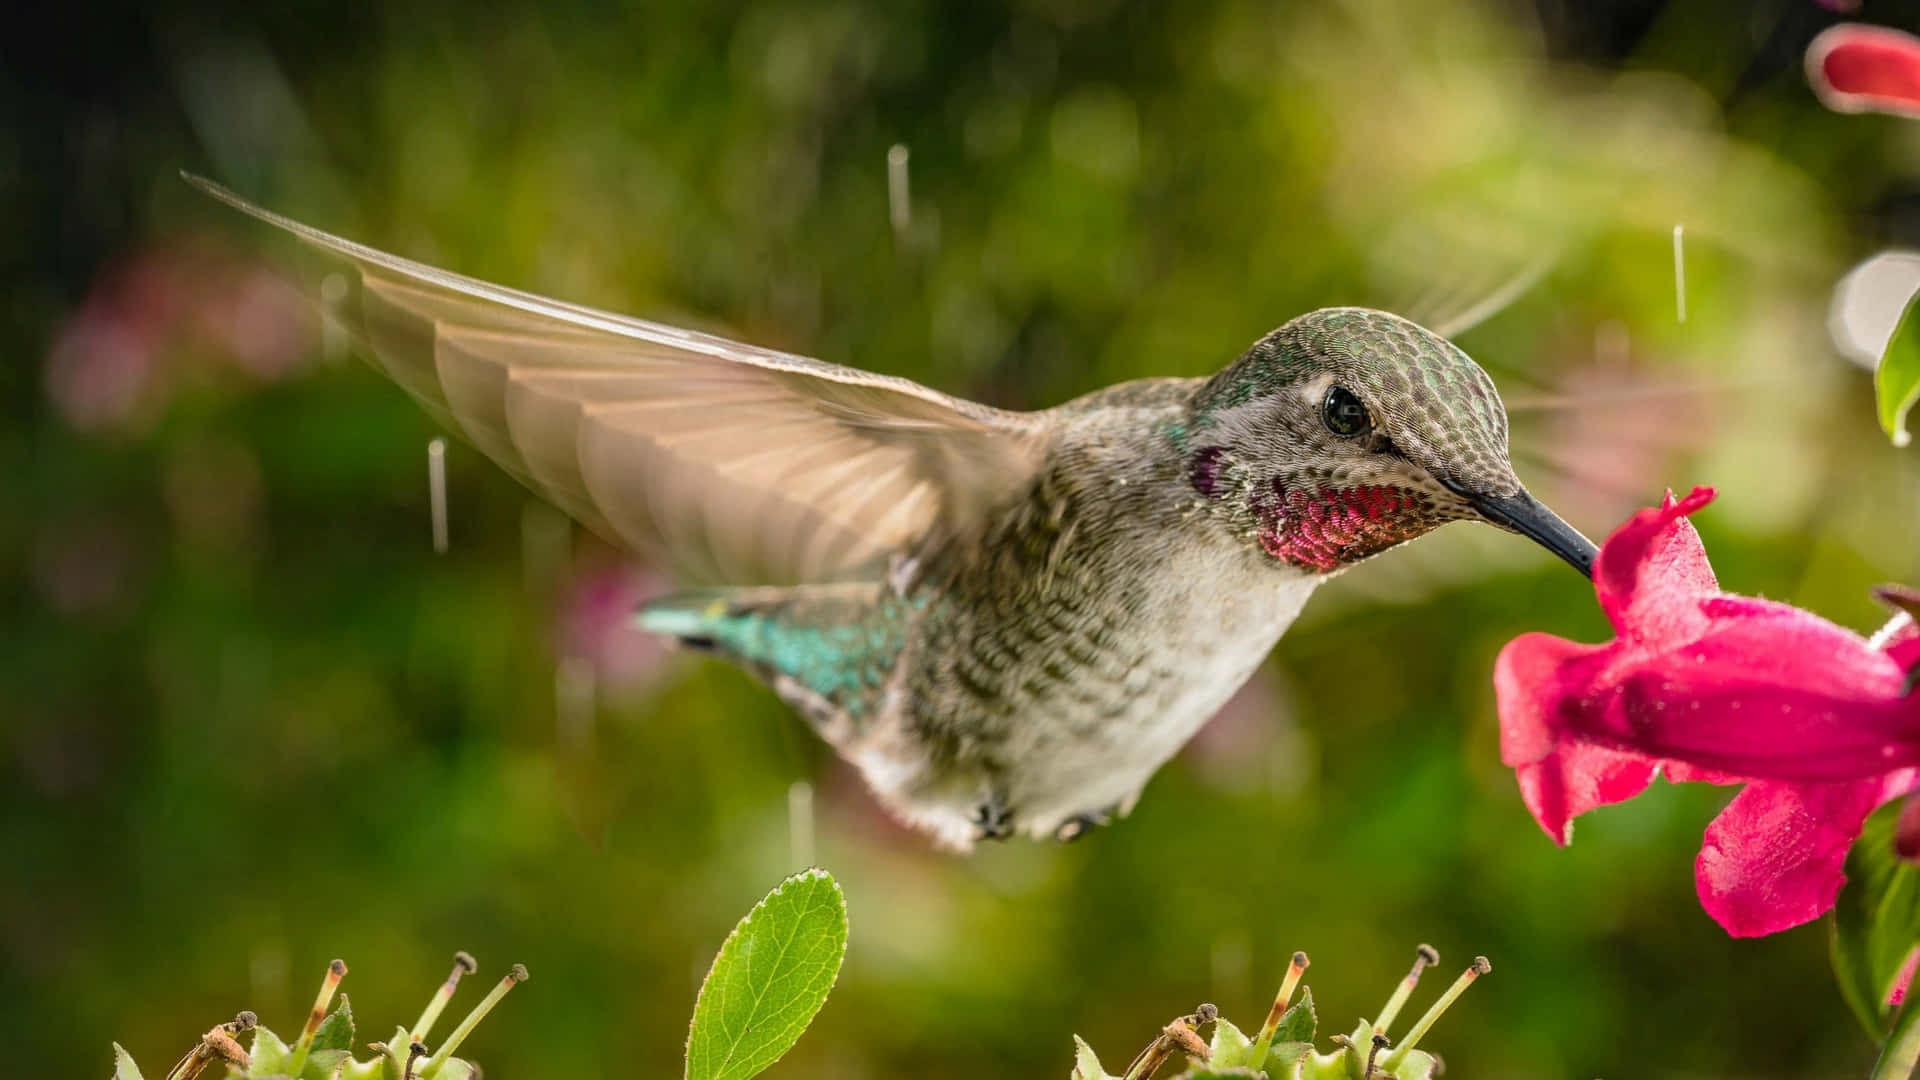 A beautiful hummingbird perched on a flower enjoying the warm summer air.